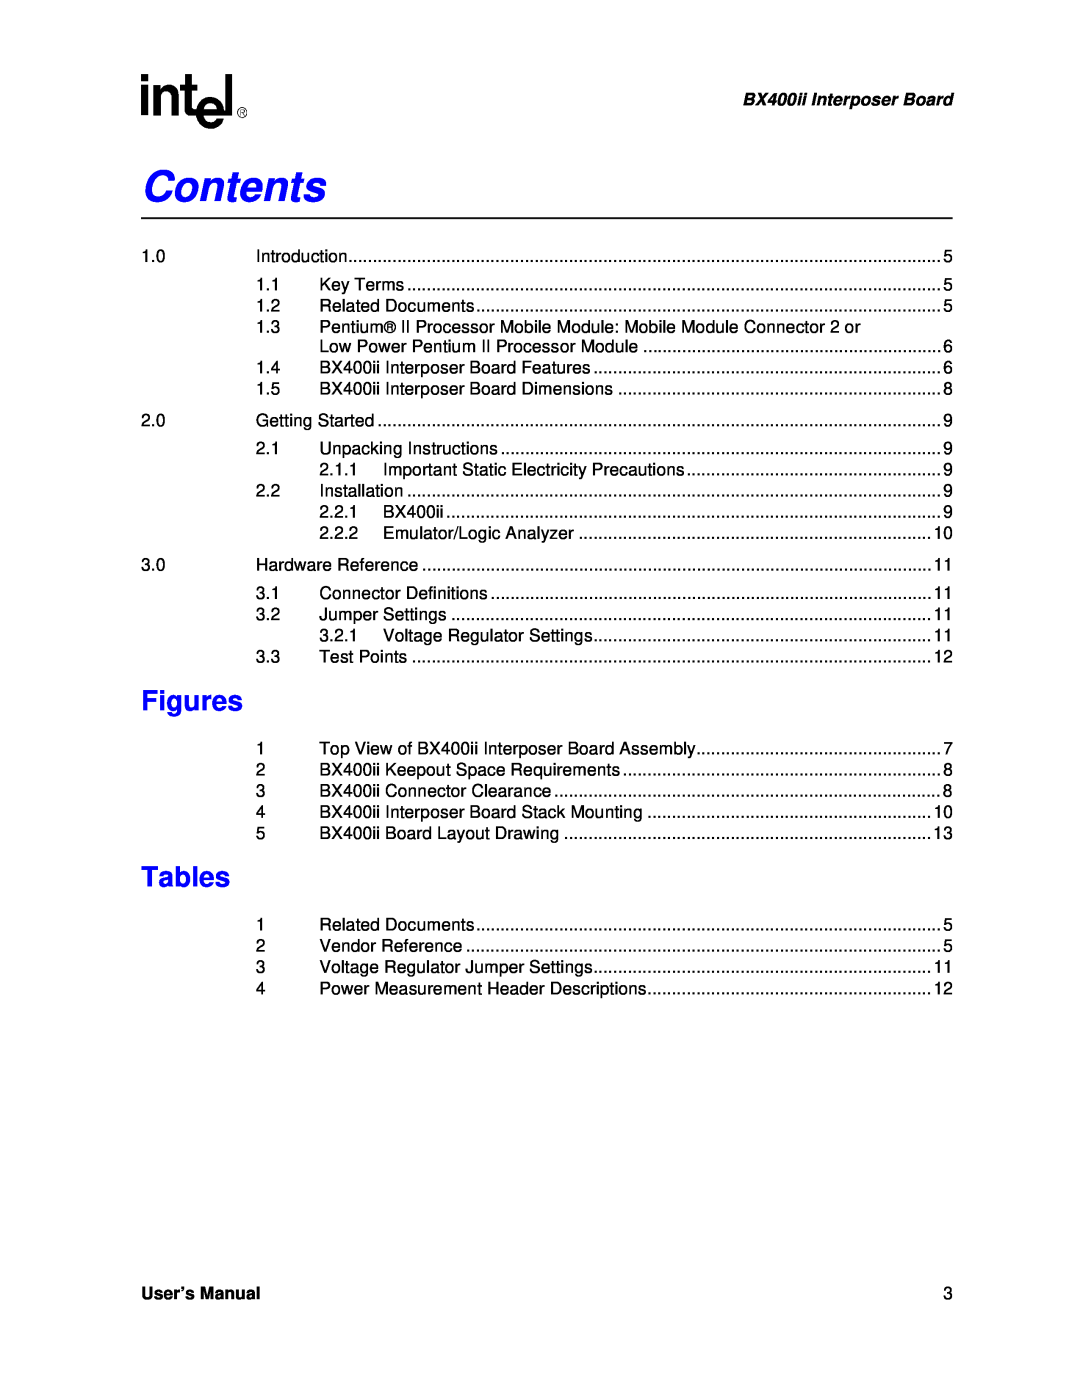 Intel BX400II user manual Contents, Figures, Tables, BX400ii Interposer Board 